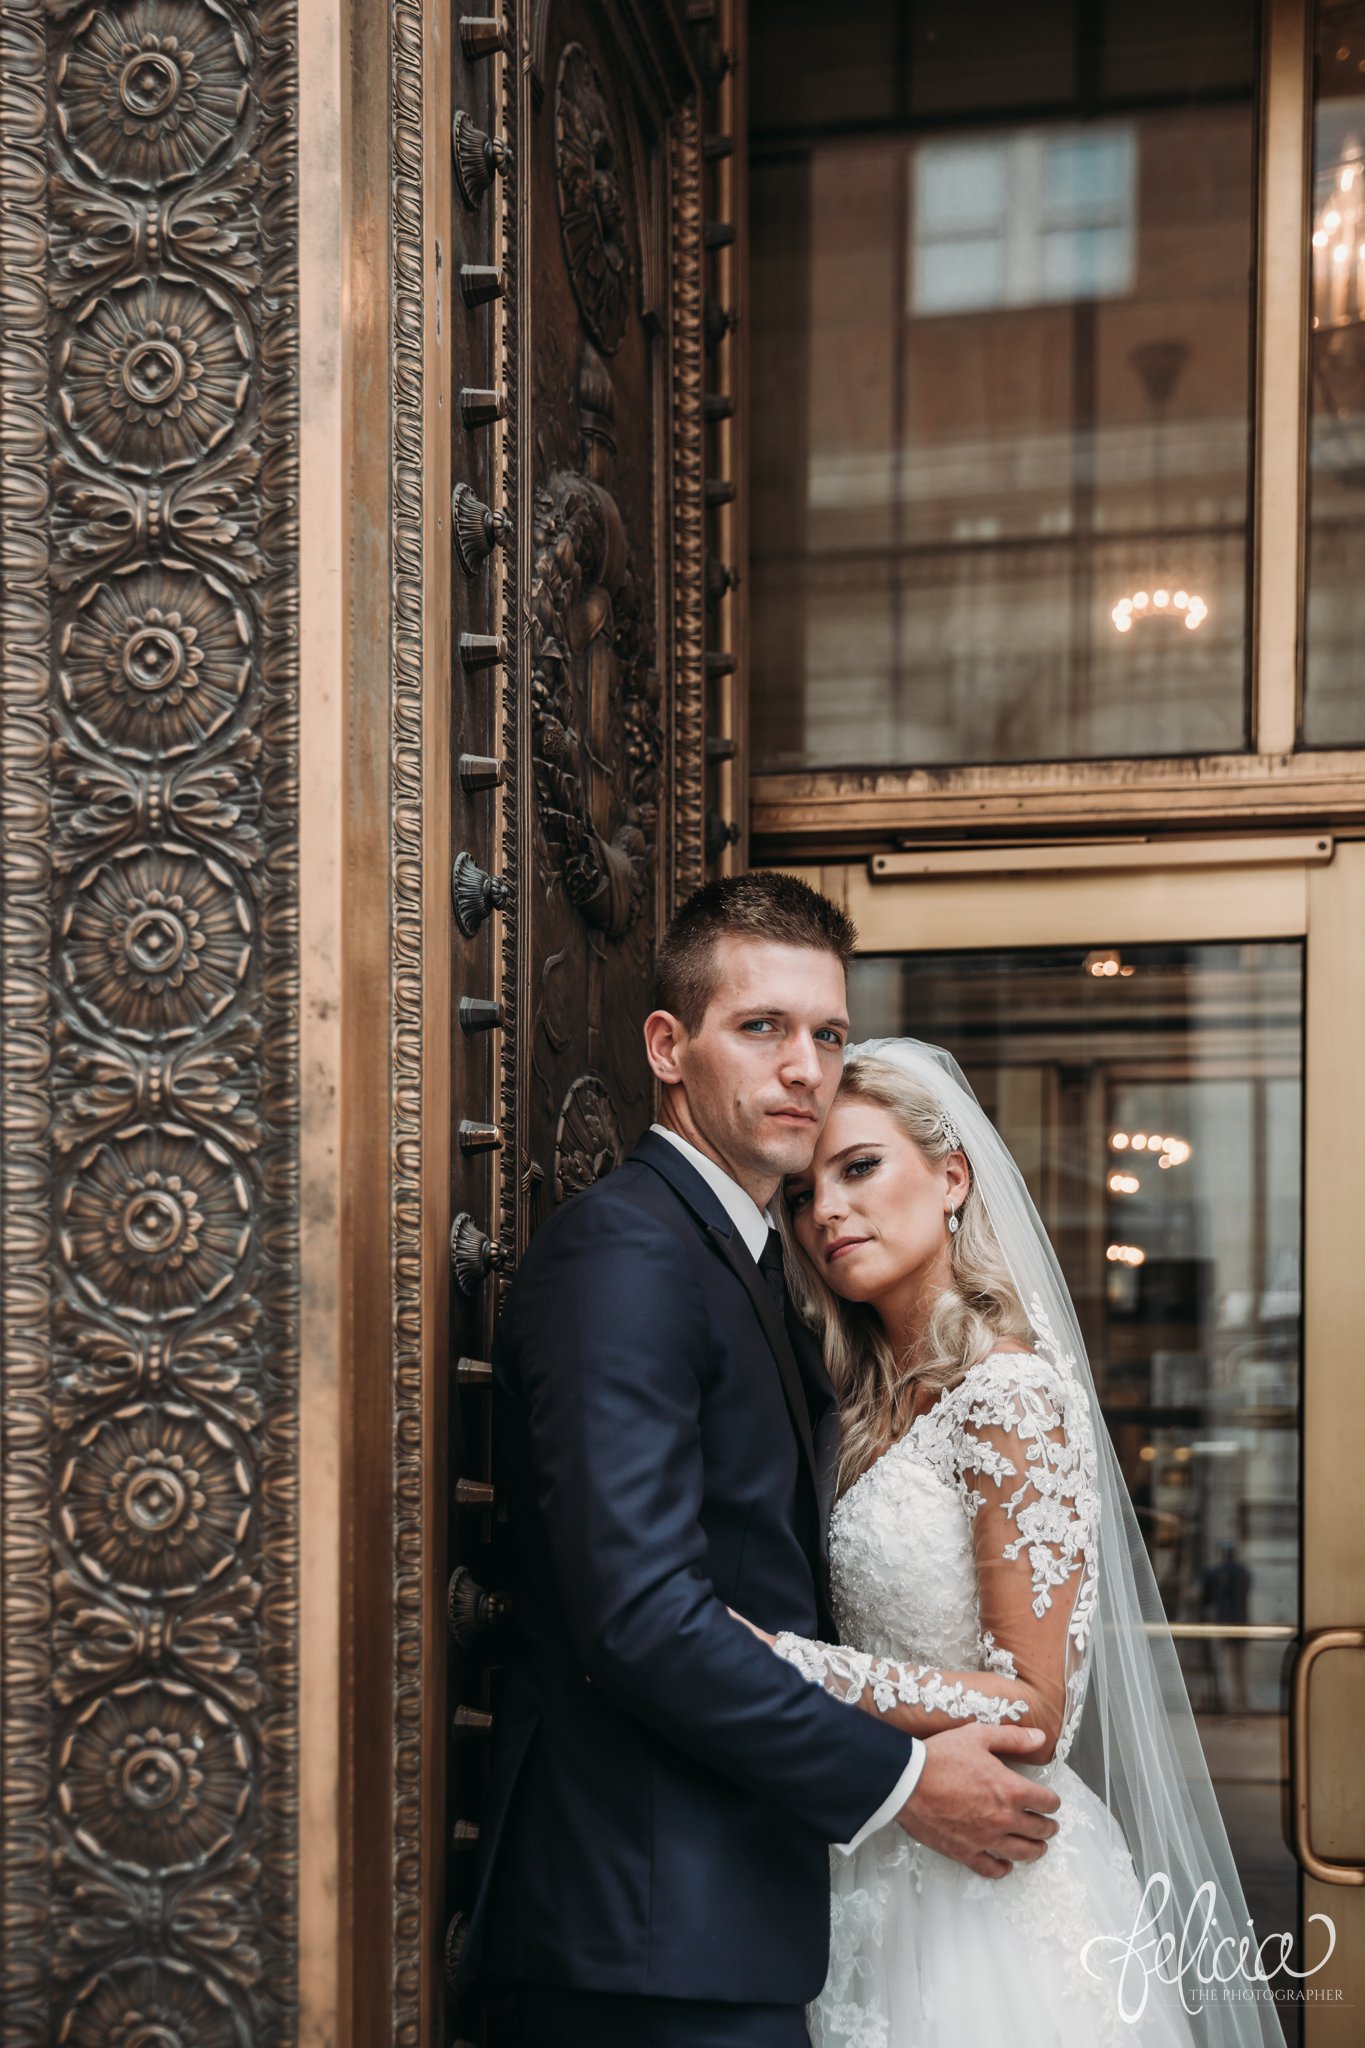 images by feliciathephotographer.com | wedding photographer | kansas city | redemptorist | classic | portrait | bride and groom | romantic | power couple | glamorous | sincere | lace long sleeve dress | navy suit | 